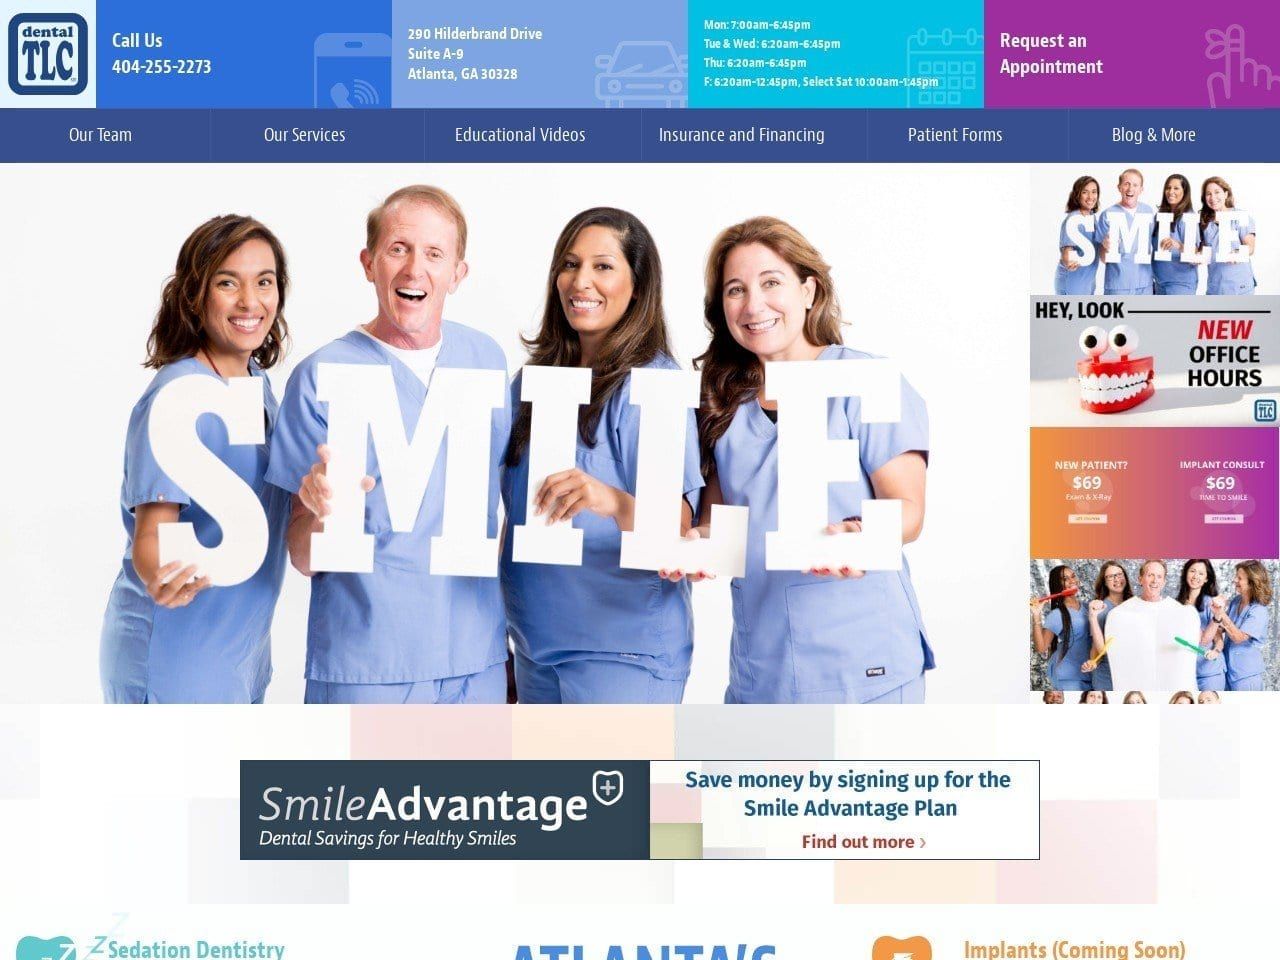 Dental TLC Website Screenshot from dentaltlc.com